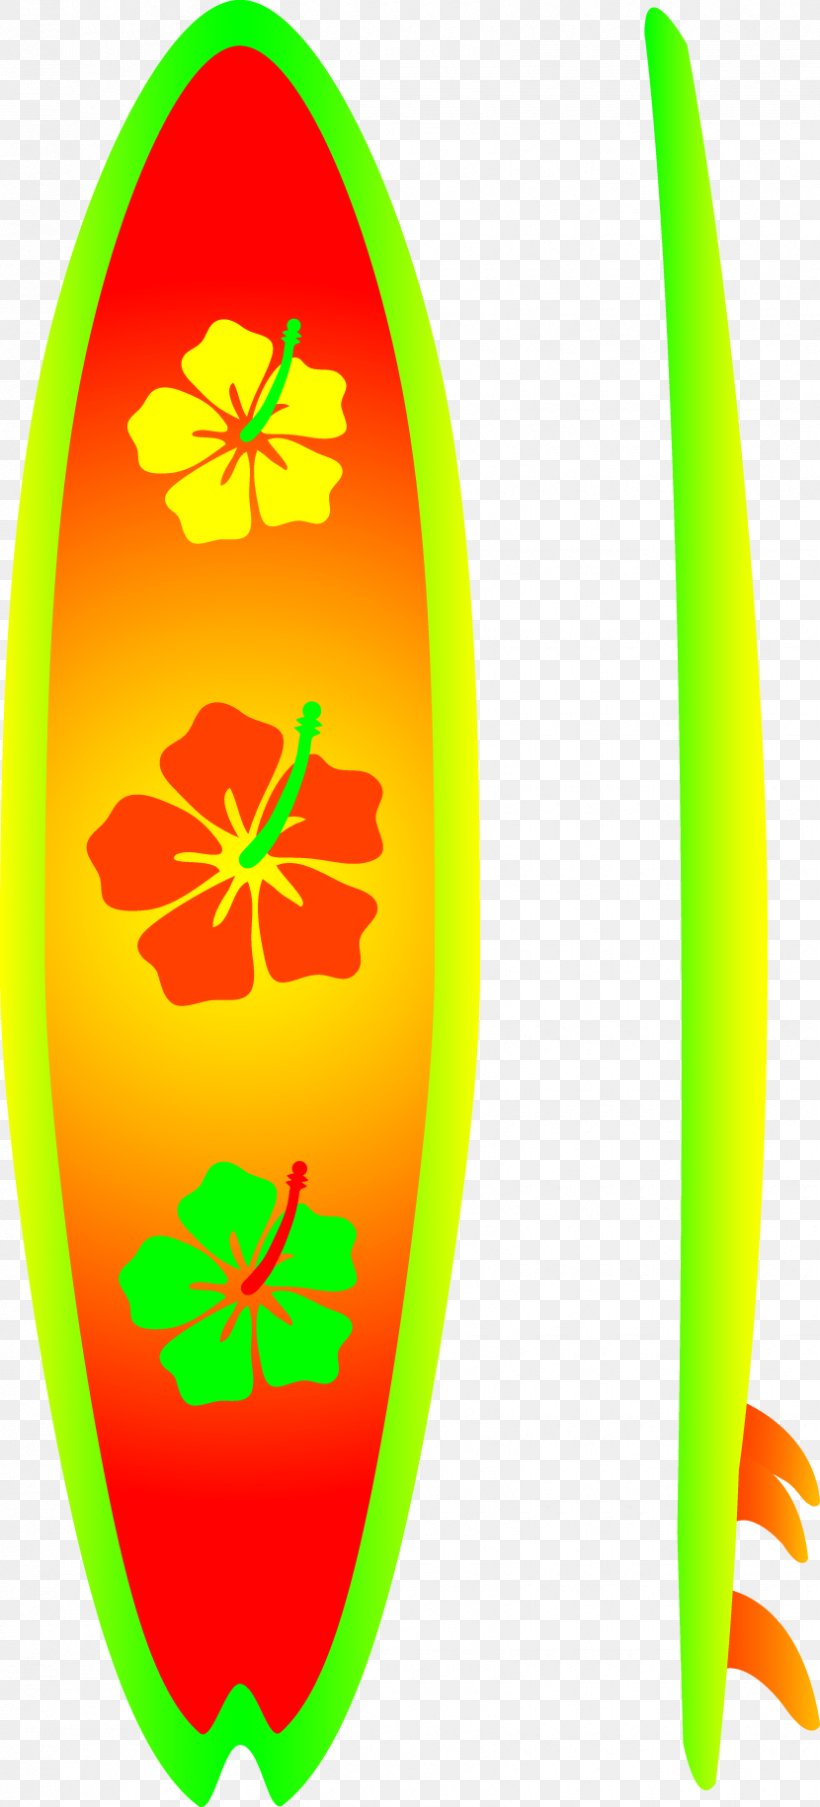 Surfboard Surfing Clip Art, PNG, 830x1830px, Surfboard, Art, Document, Grass, Green Download Free